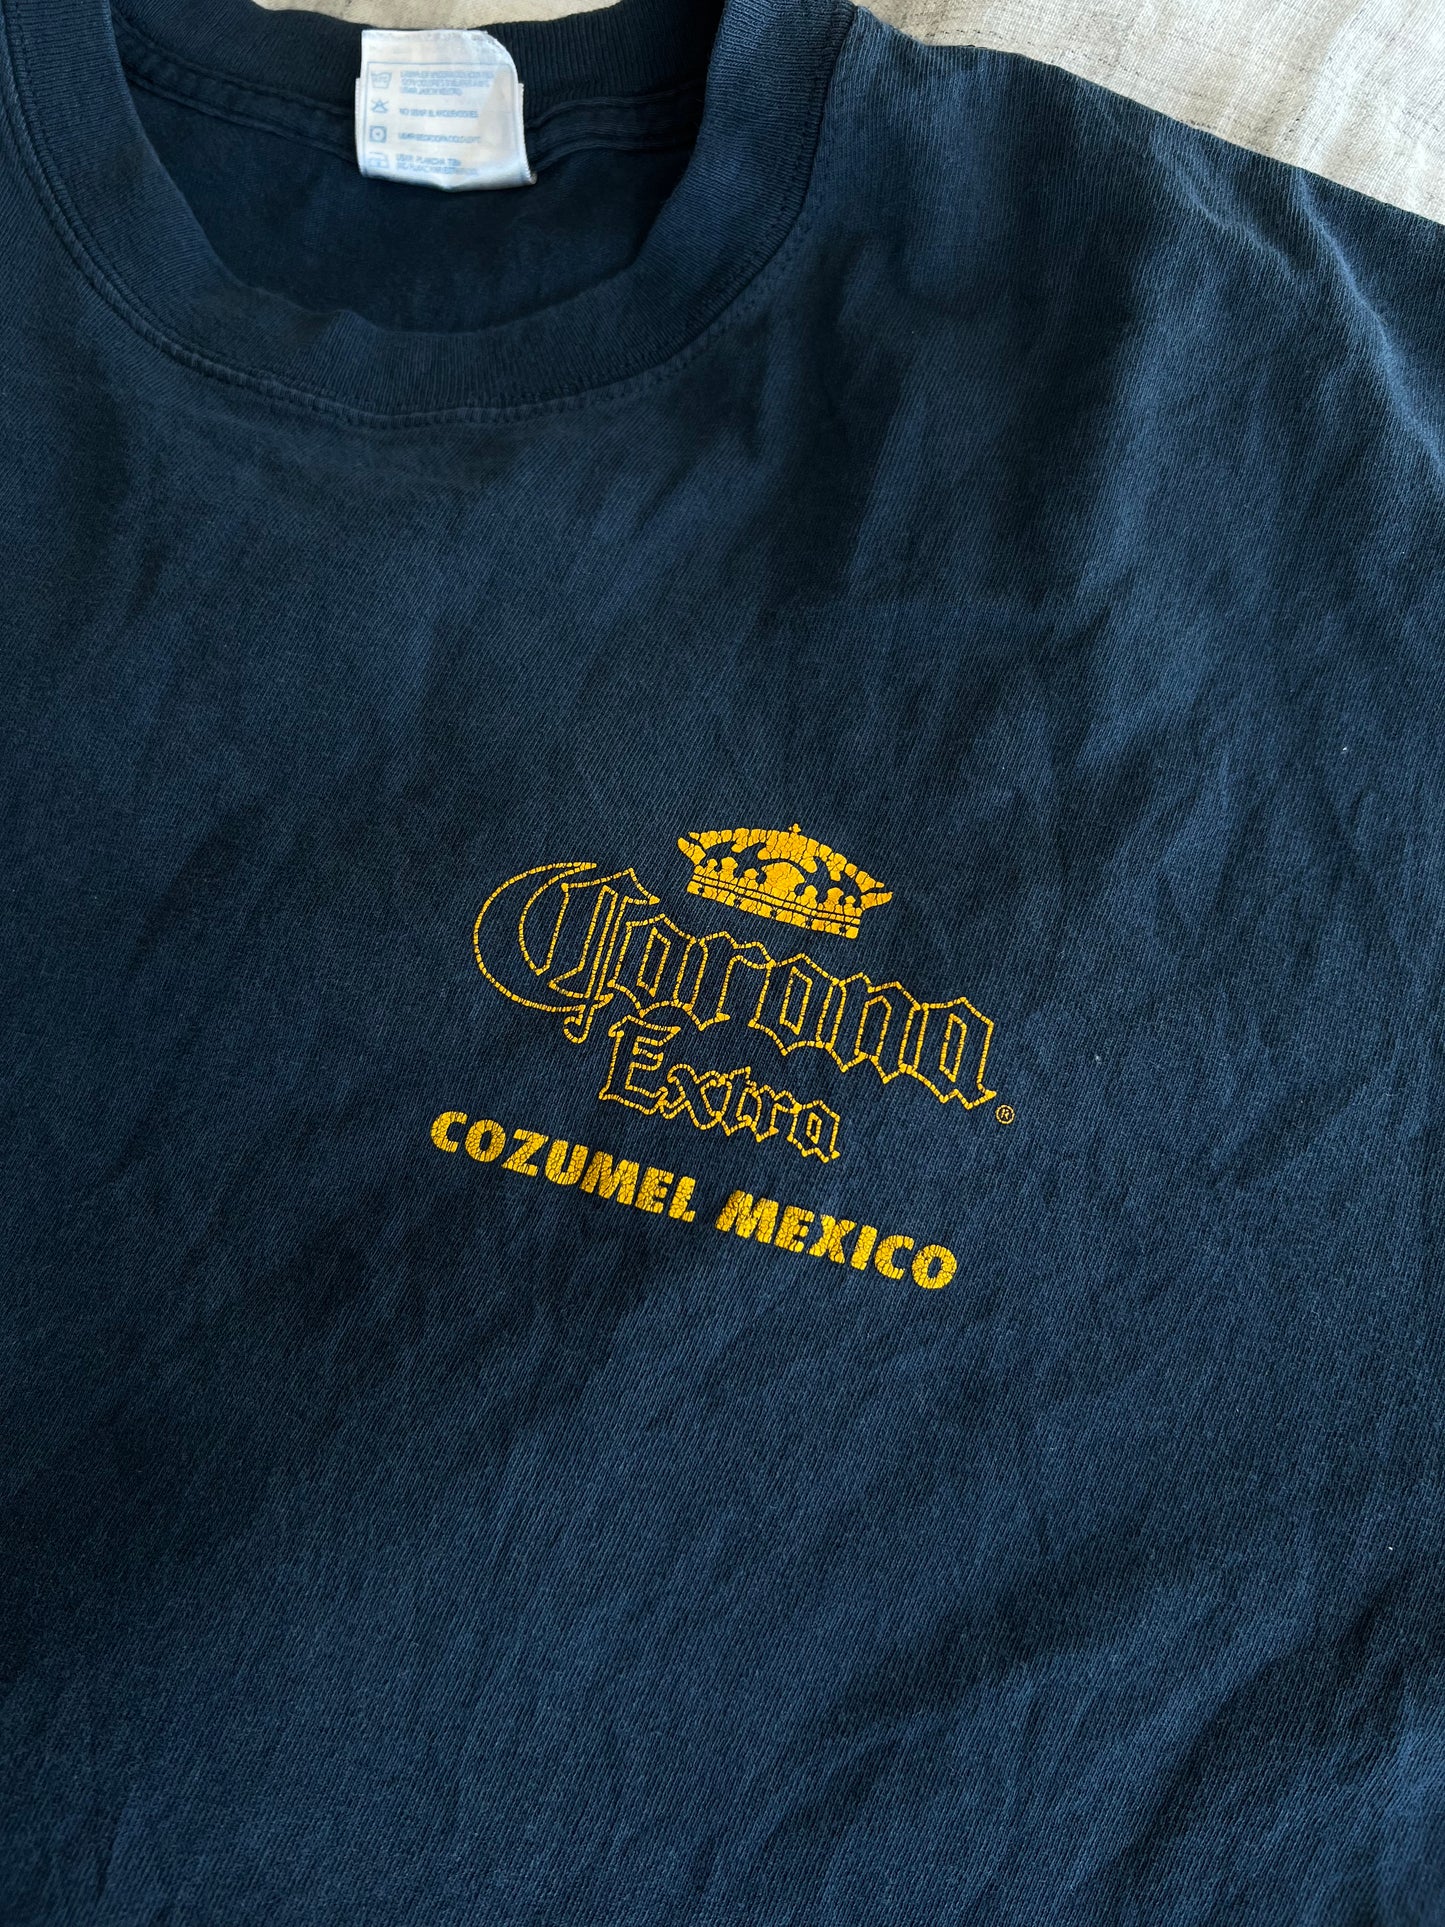 Vintage Corona Shirt